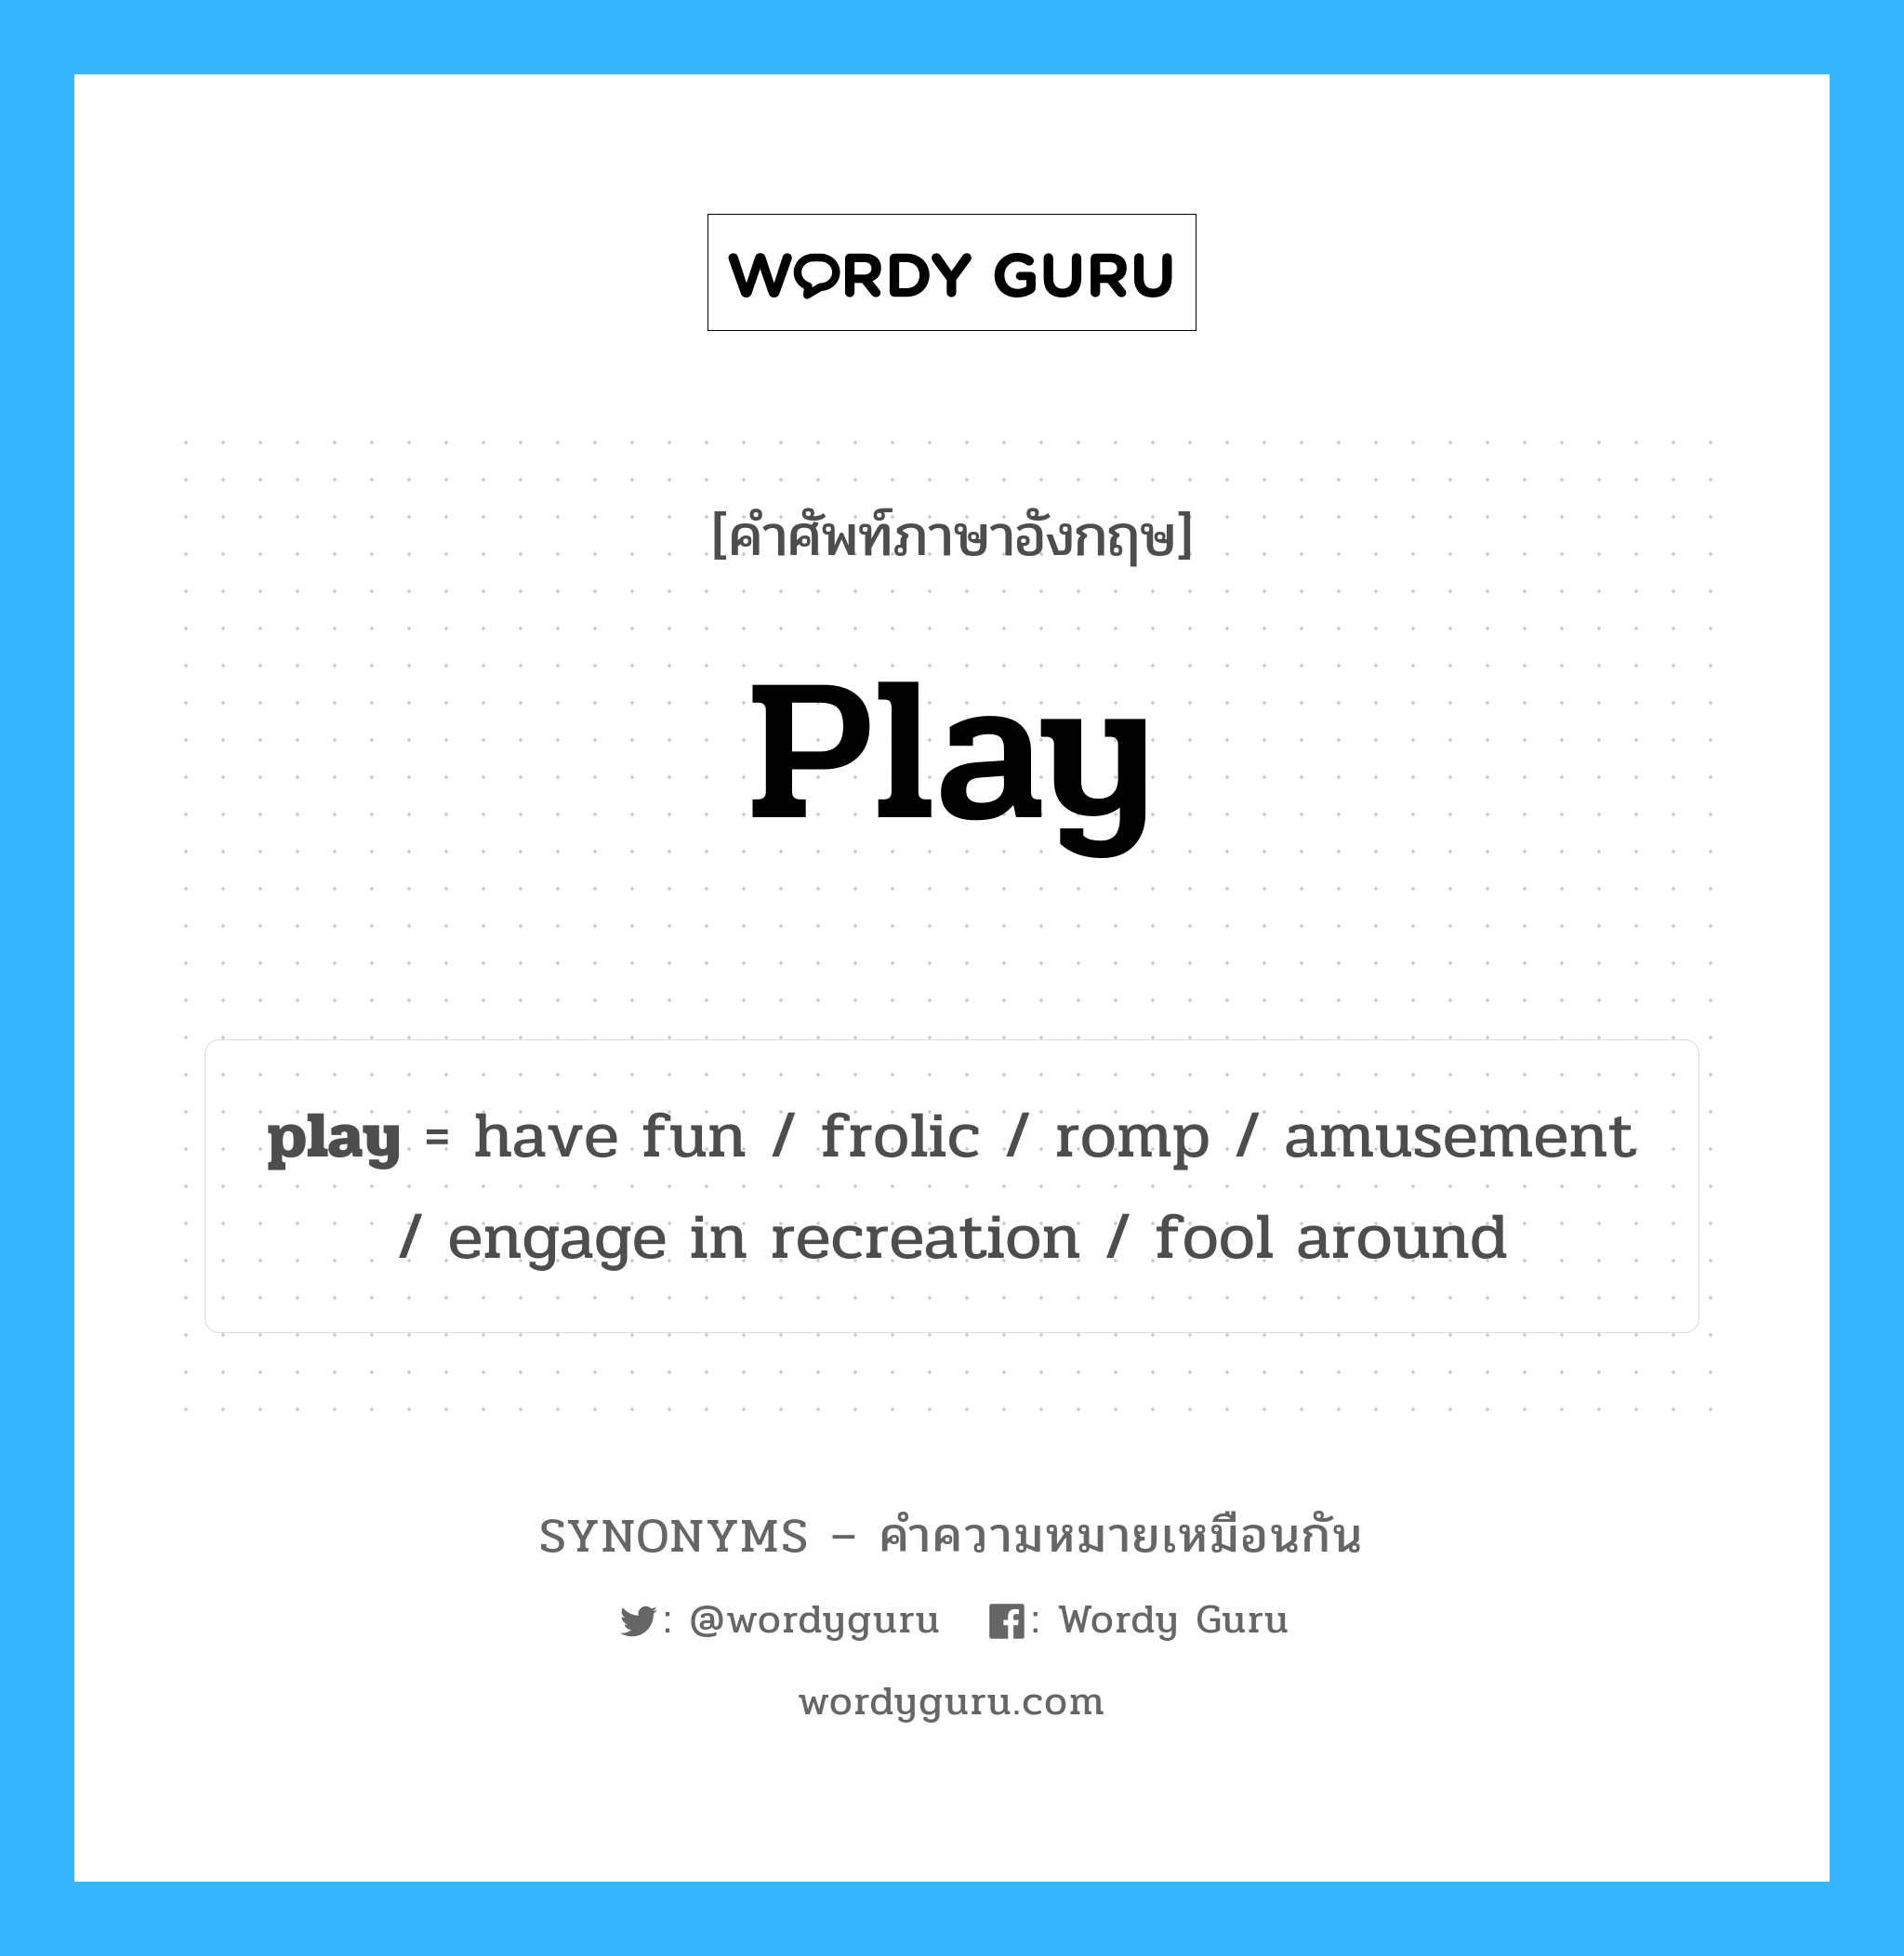 frolic เป็นหนึ่งใน play และมีคำอื่น ๆ อีกดังนี้, คำศัพท์ภาษาอังกฤษ frolic ความหมายคล้ายกันกับ play แปลว่า ลี หมวด play